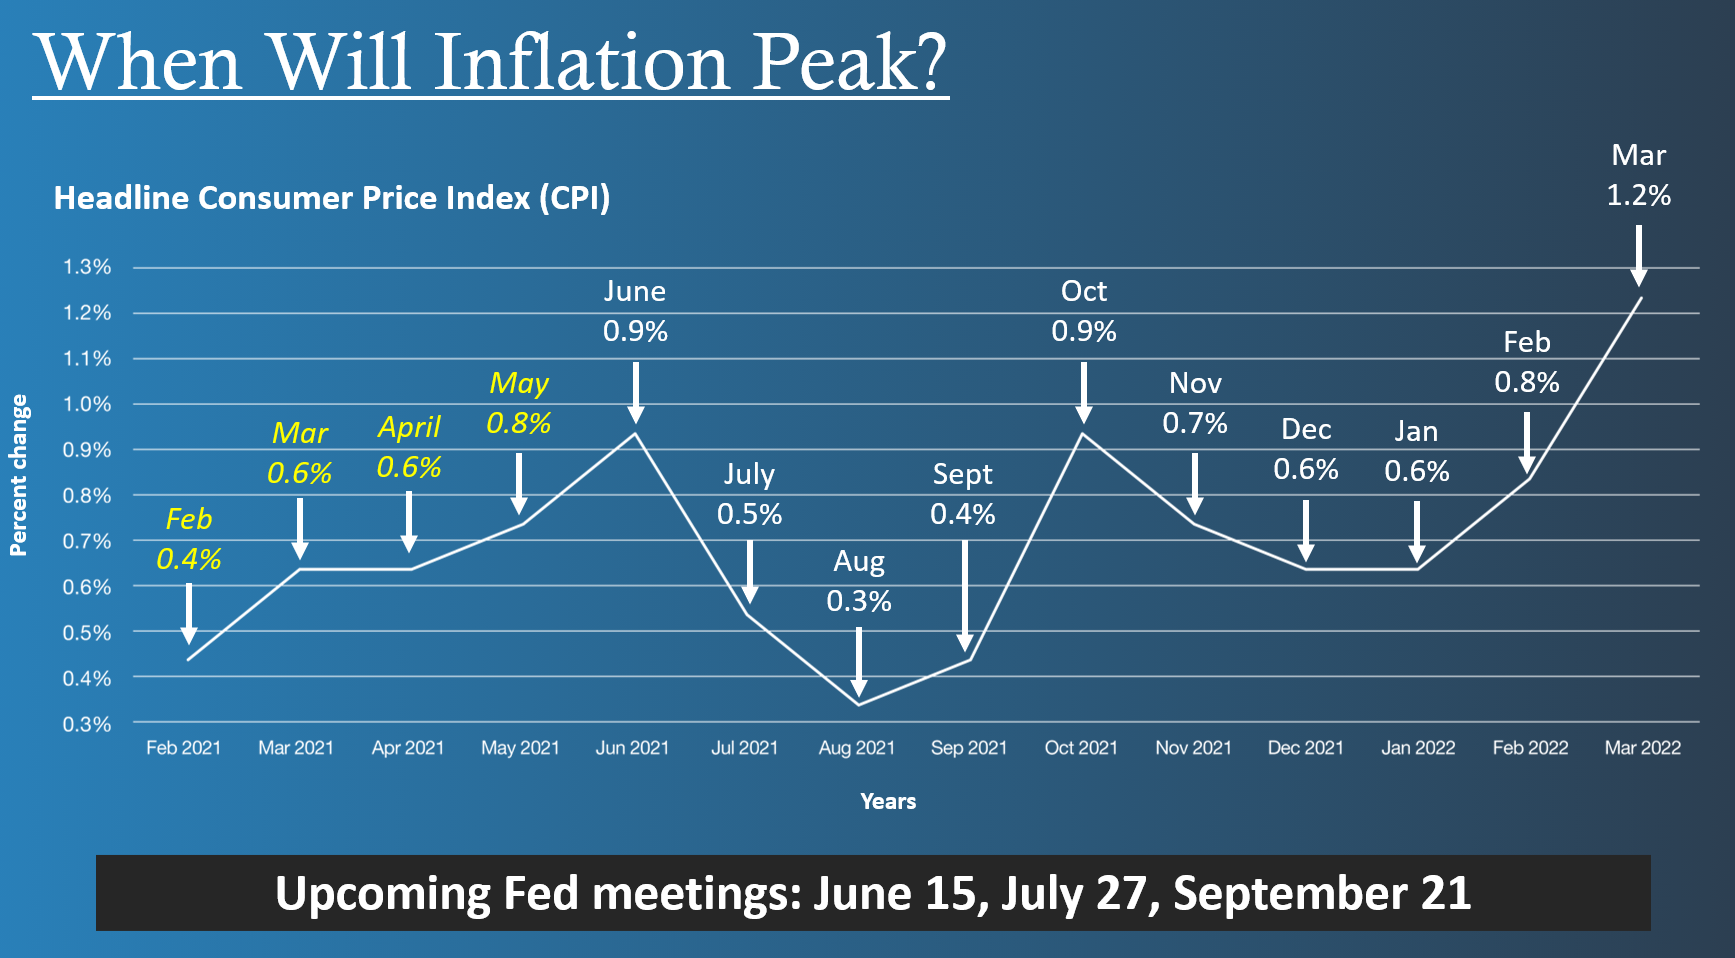 When Will Inflation Peak?